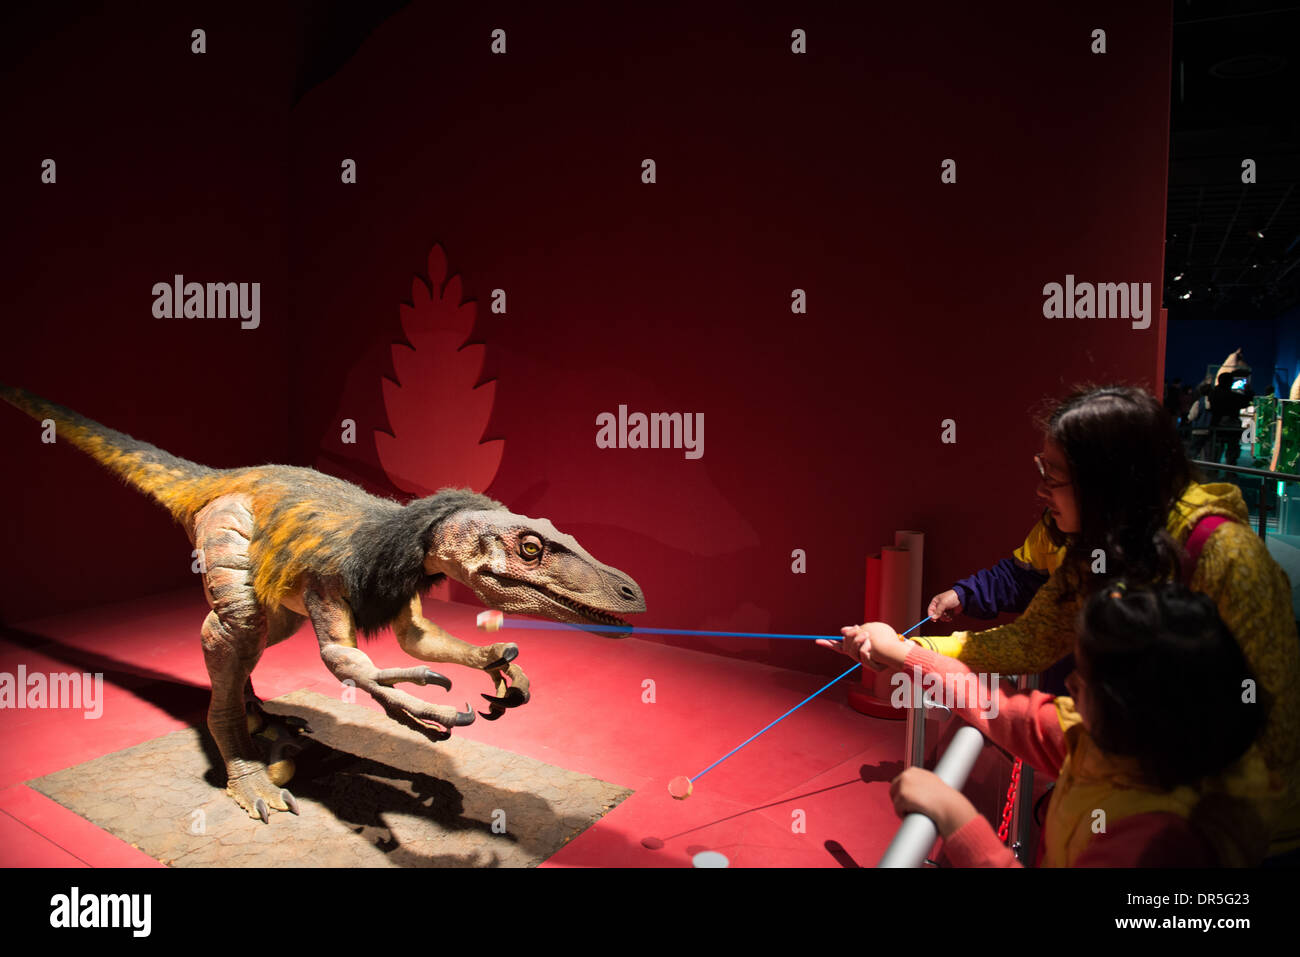 Modell Dinosaurier in Lebensgröße auf dem Bildschirm im Science Museum in Hongkong. Stockfoto